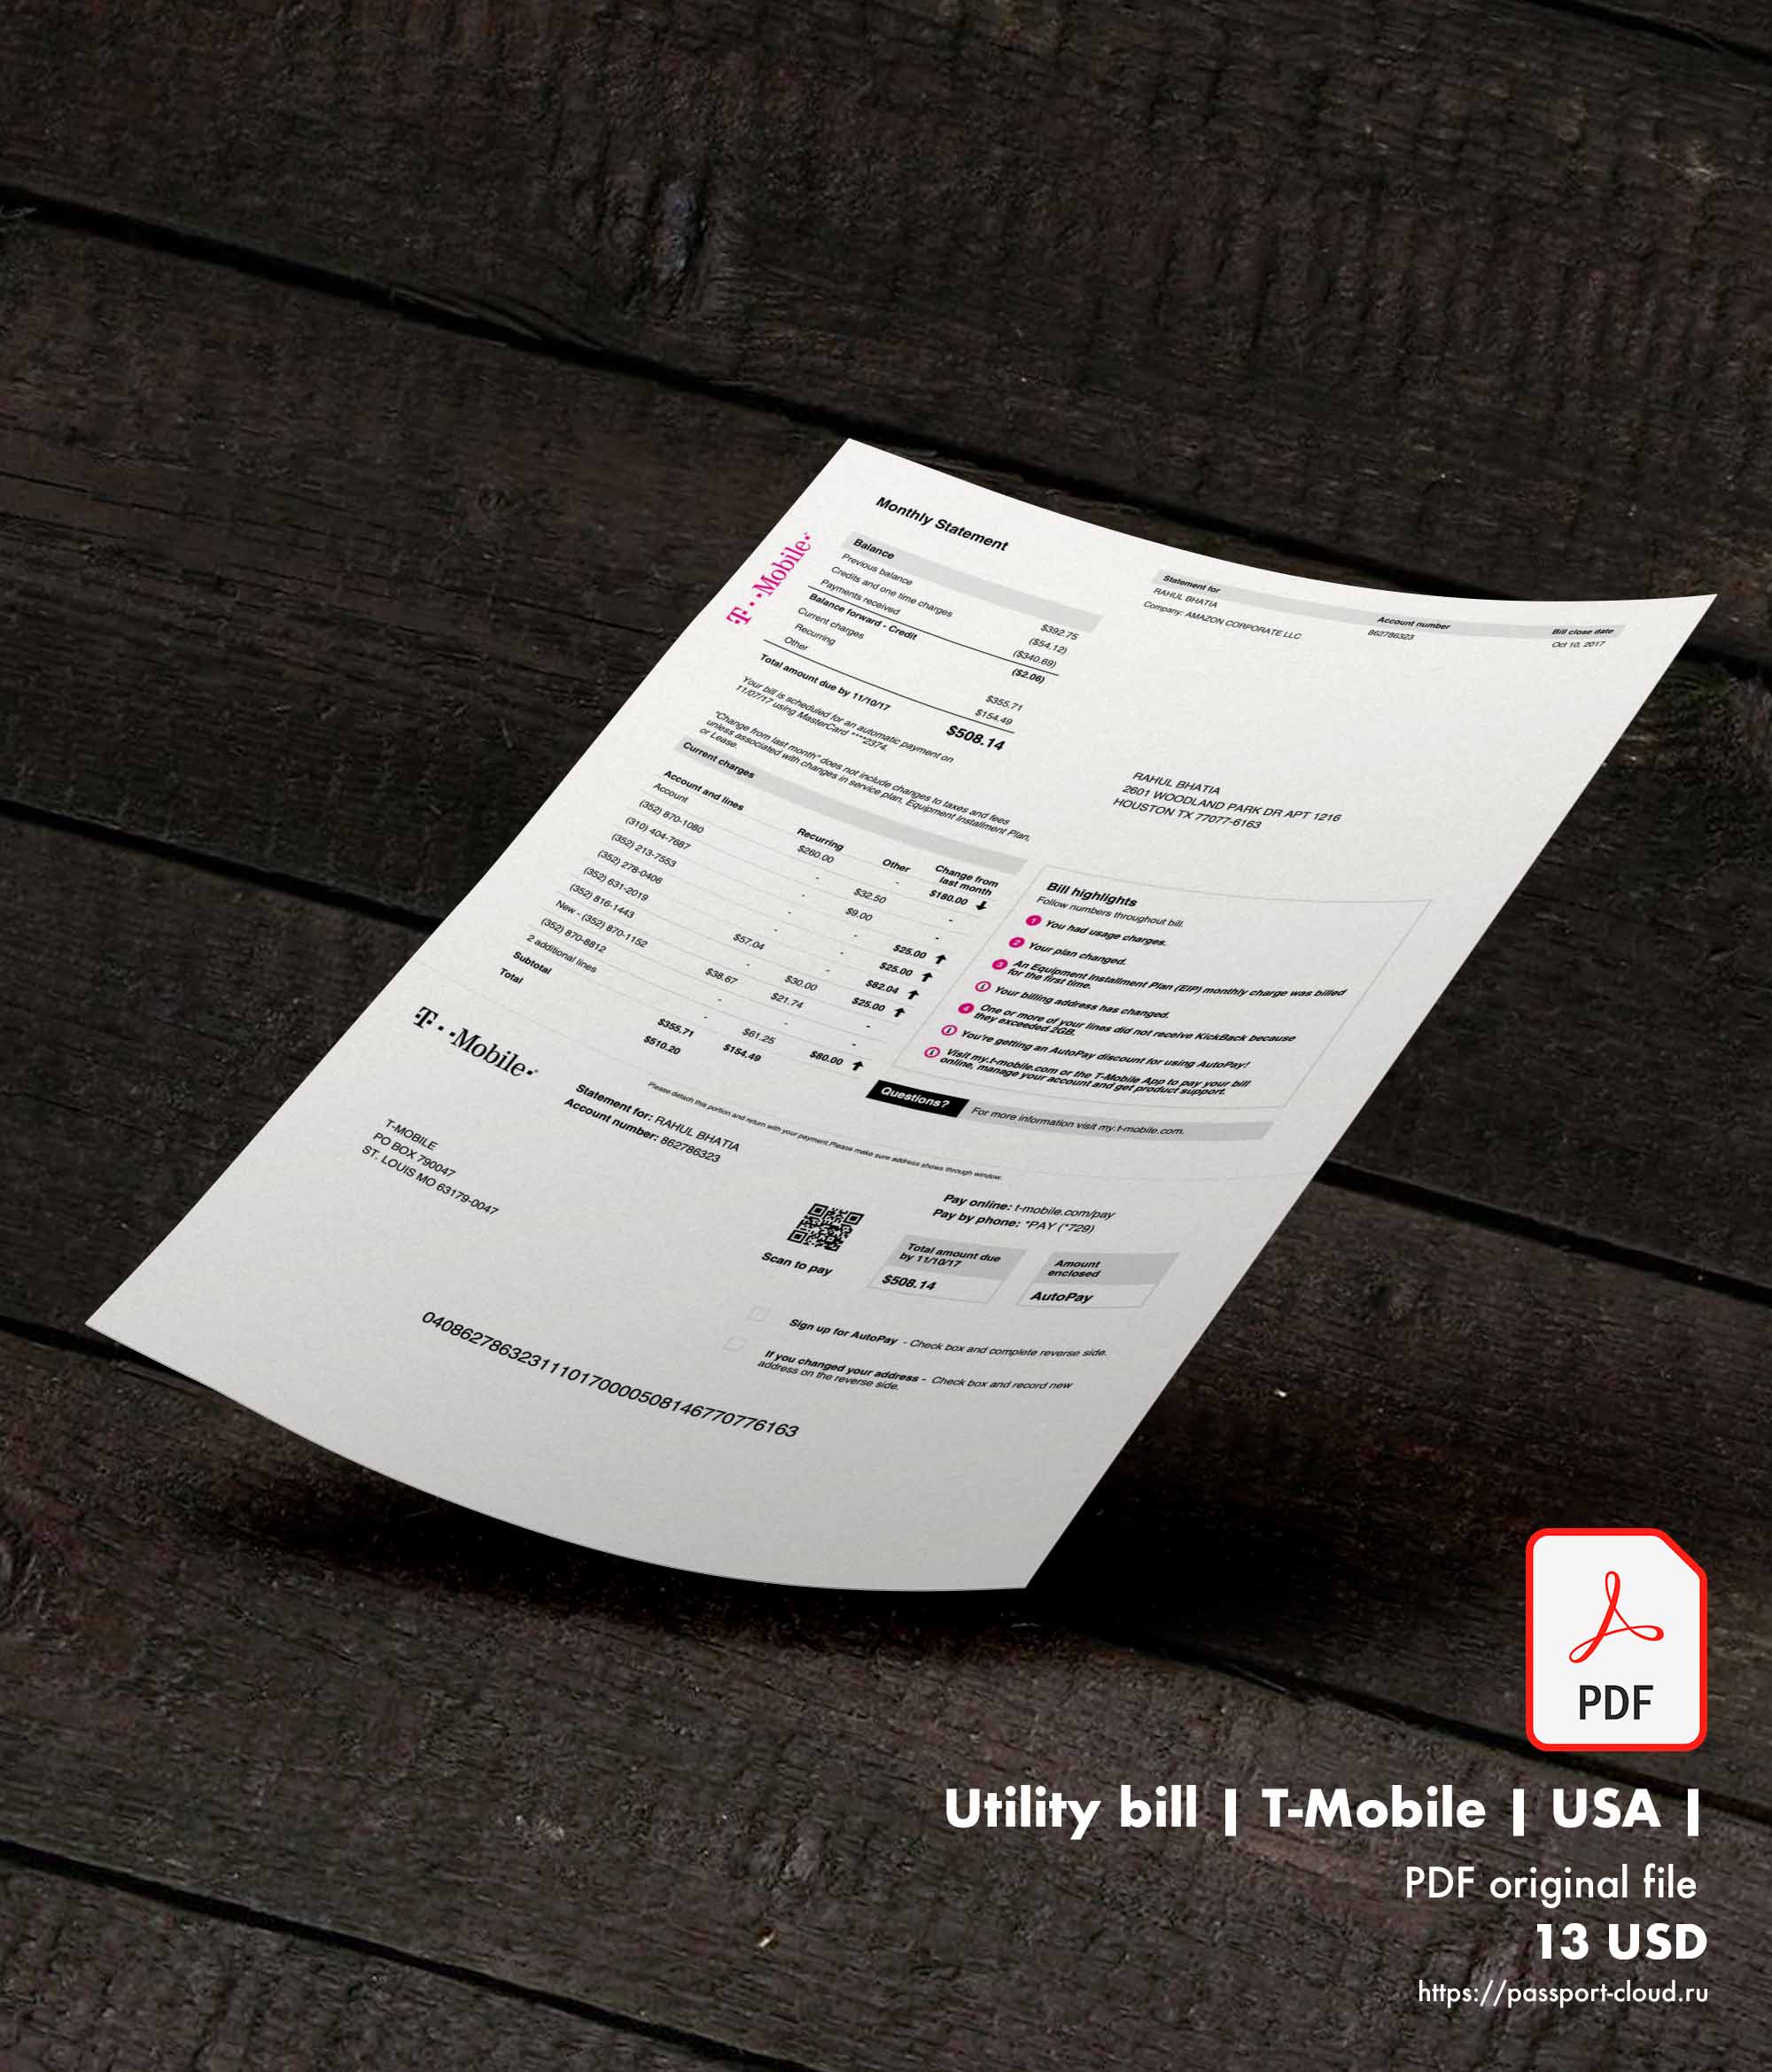 Utility bill | T-Mobile | USA |1